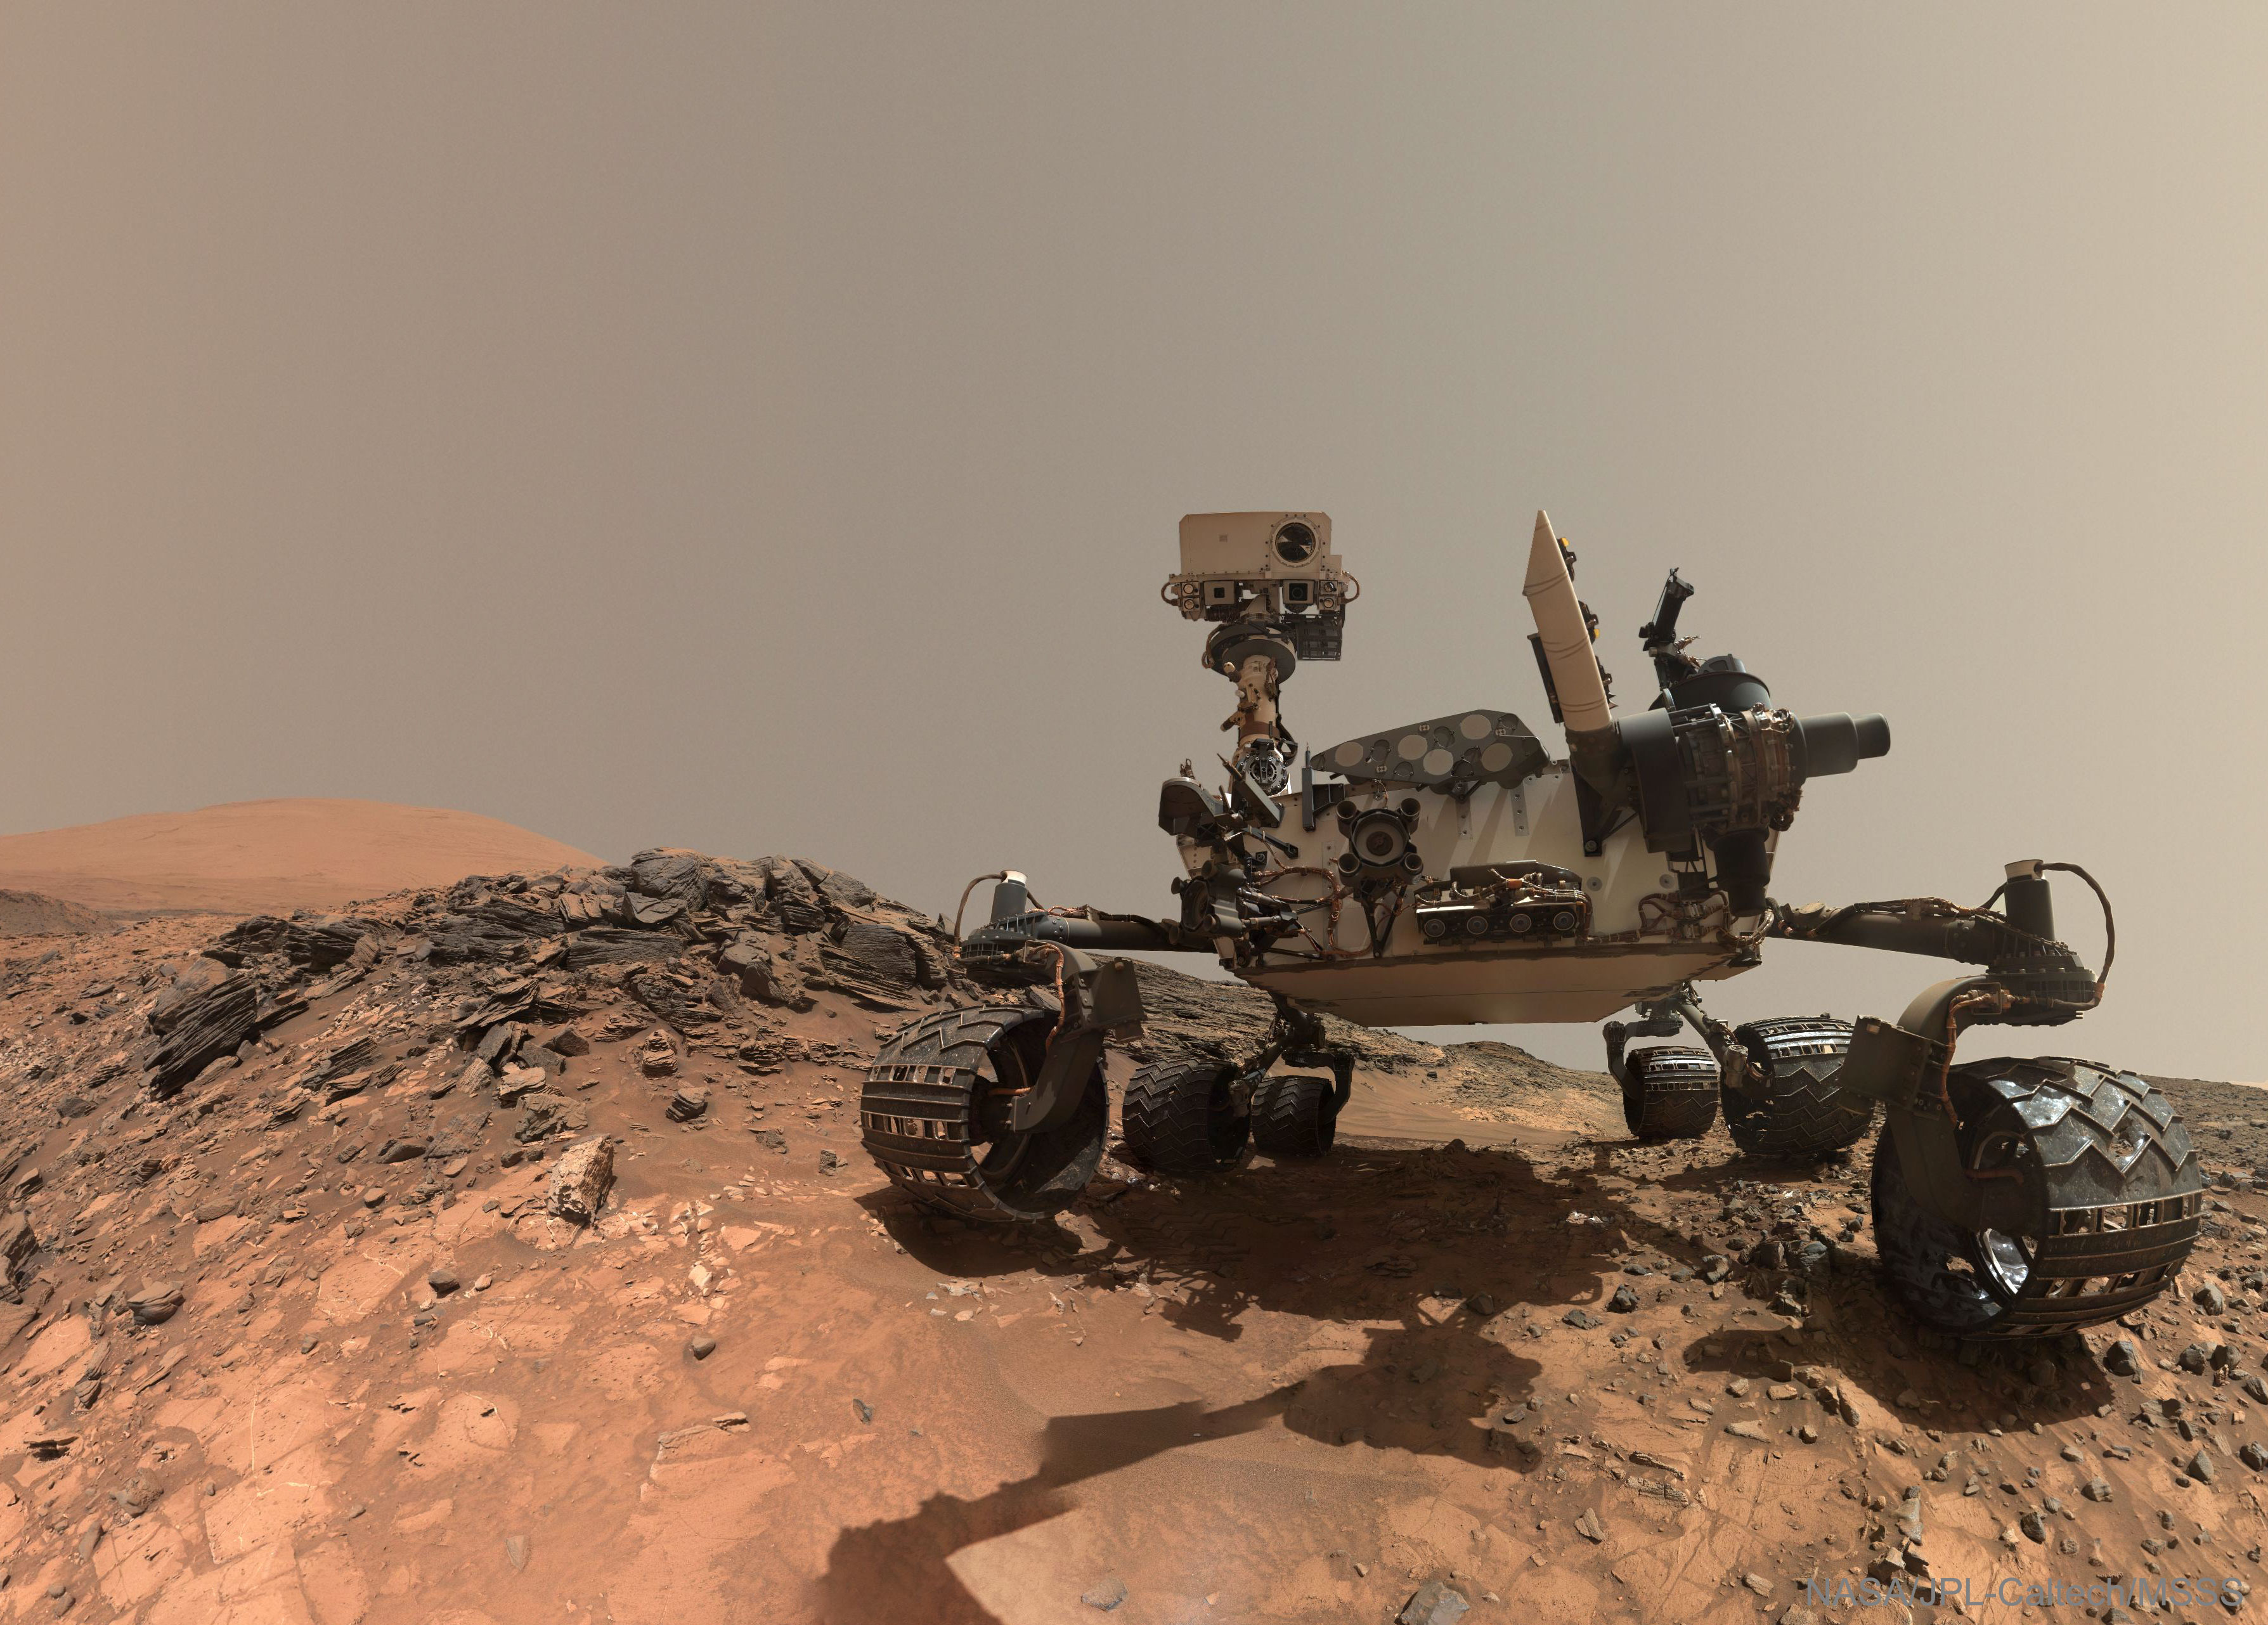 APOD: 2017 November 20 - Curiosity Rover Takes Selfie on Mars